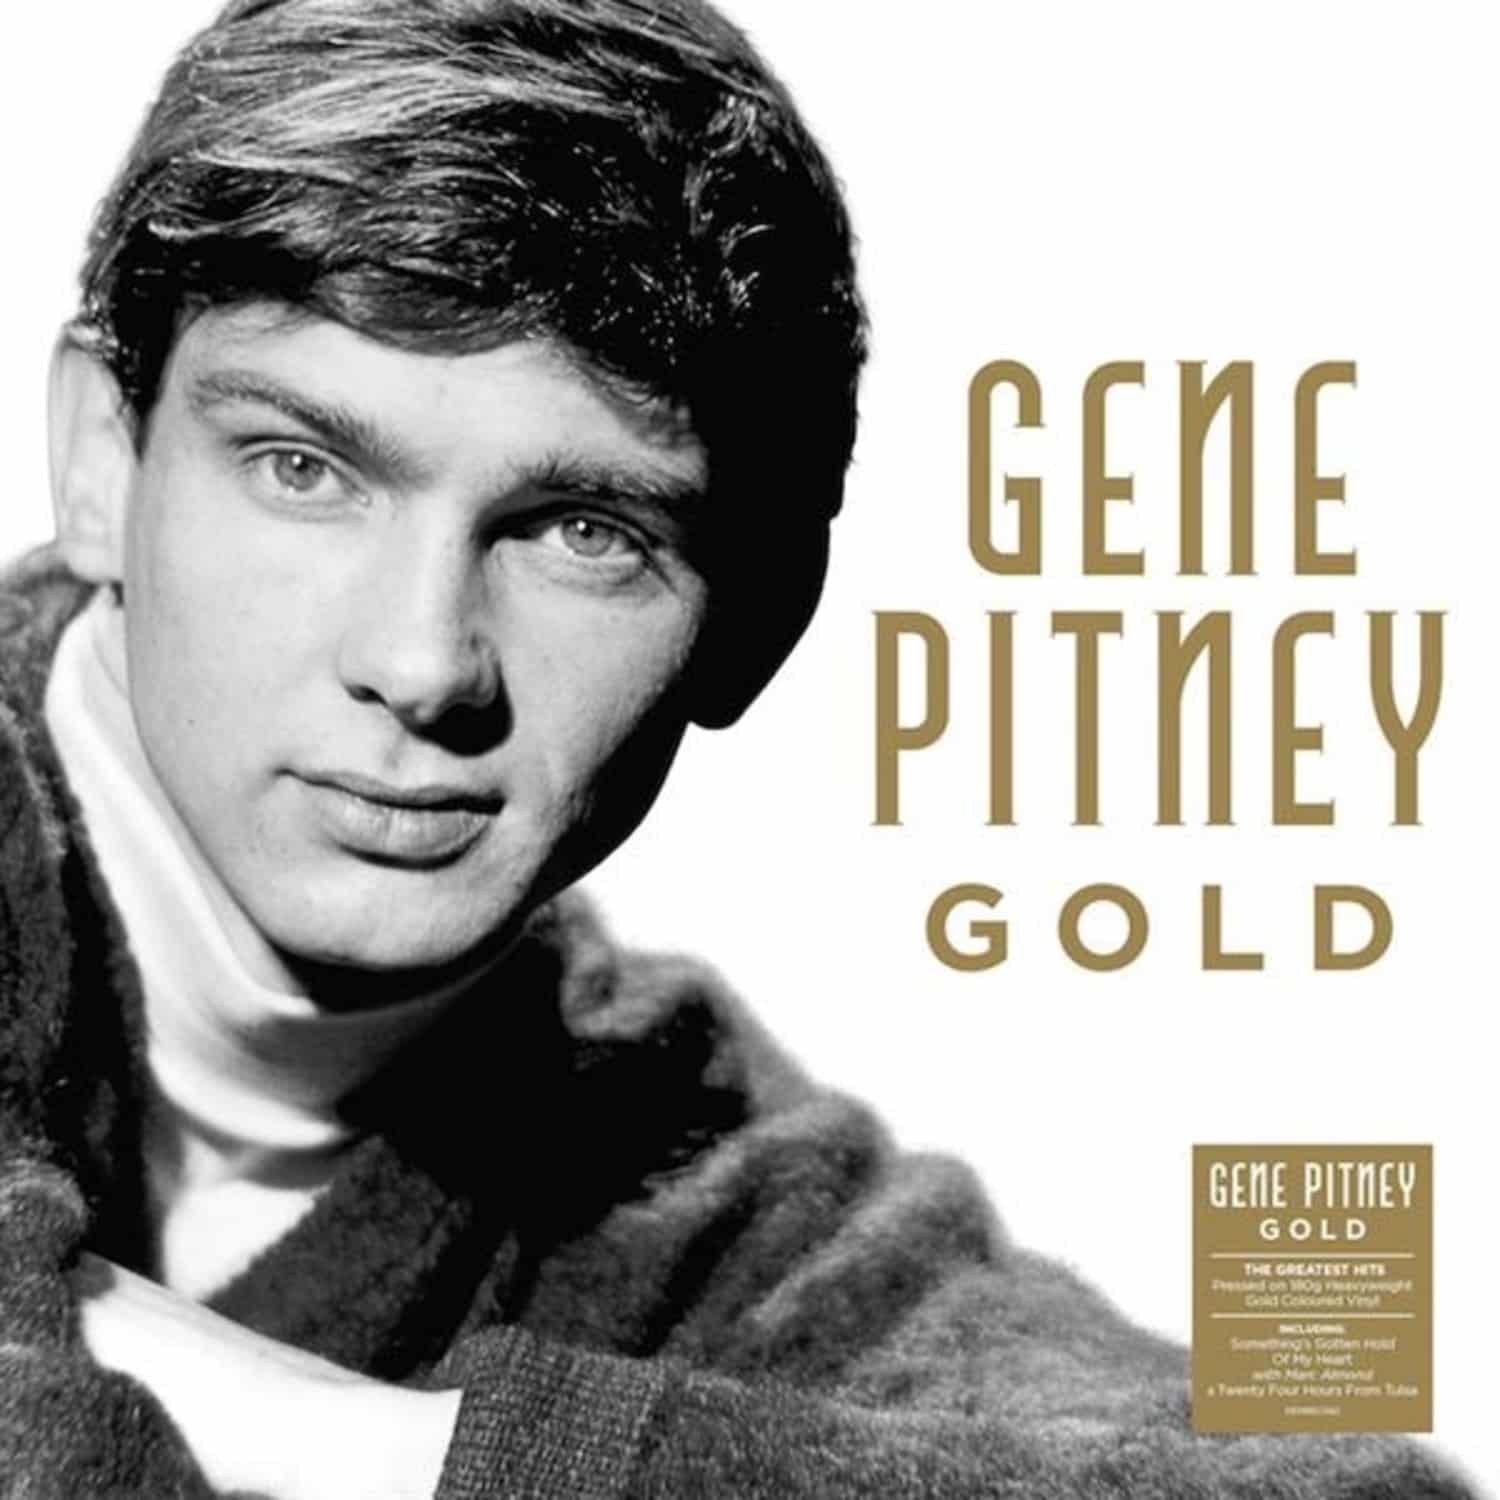  Gene Pitney - GOLD 